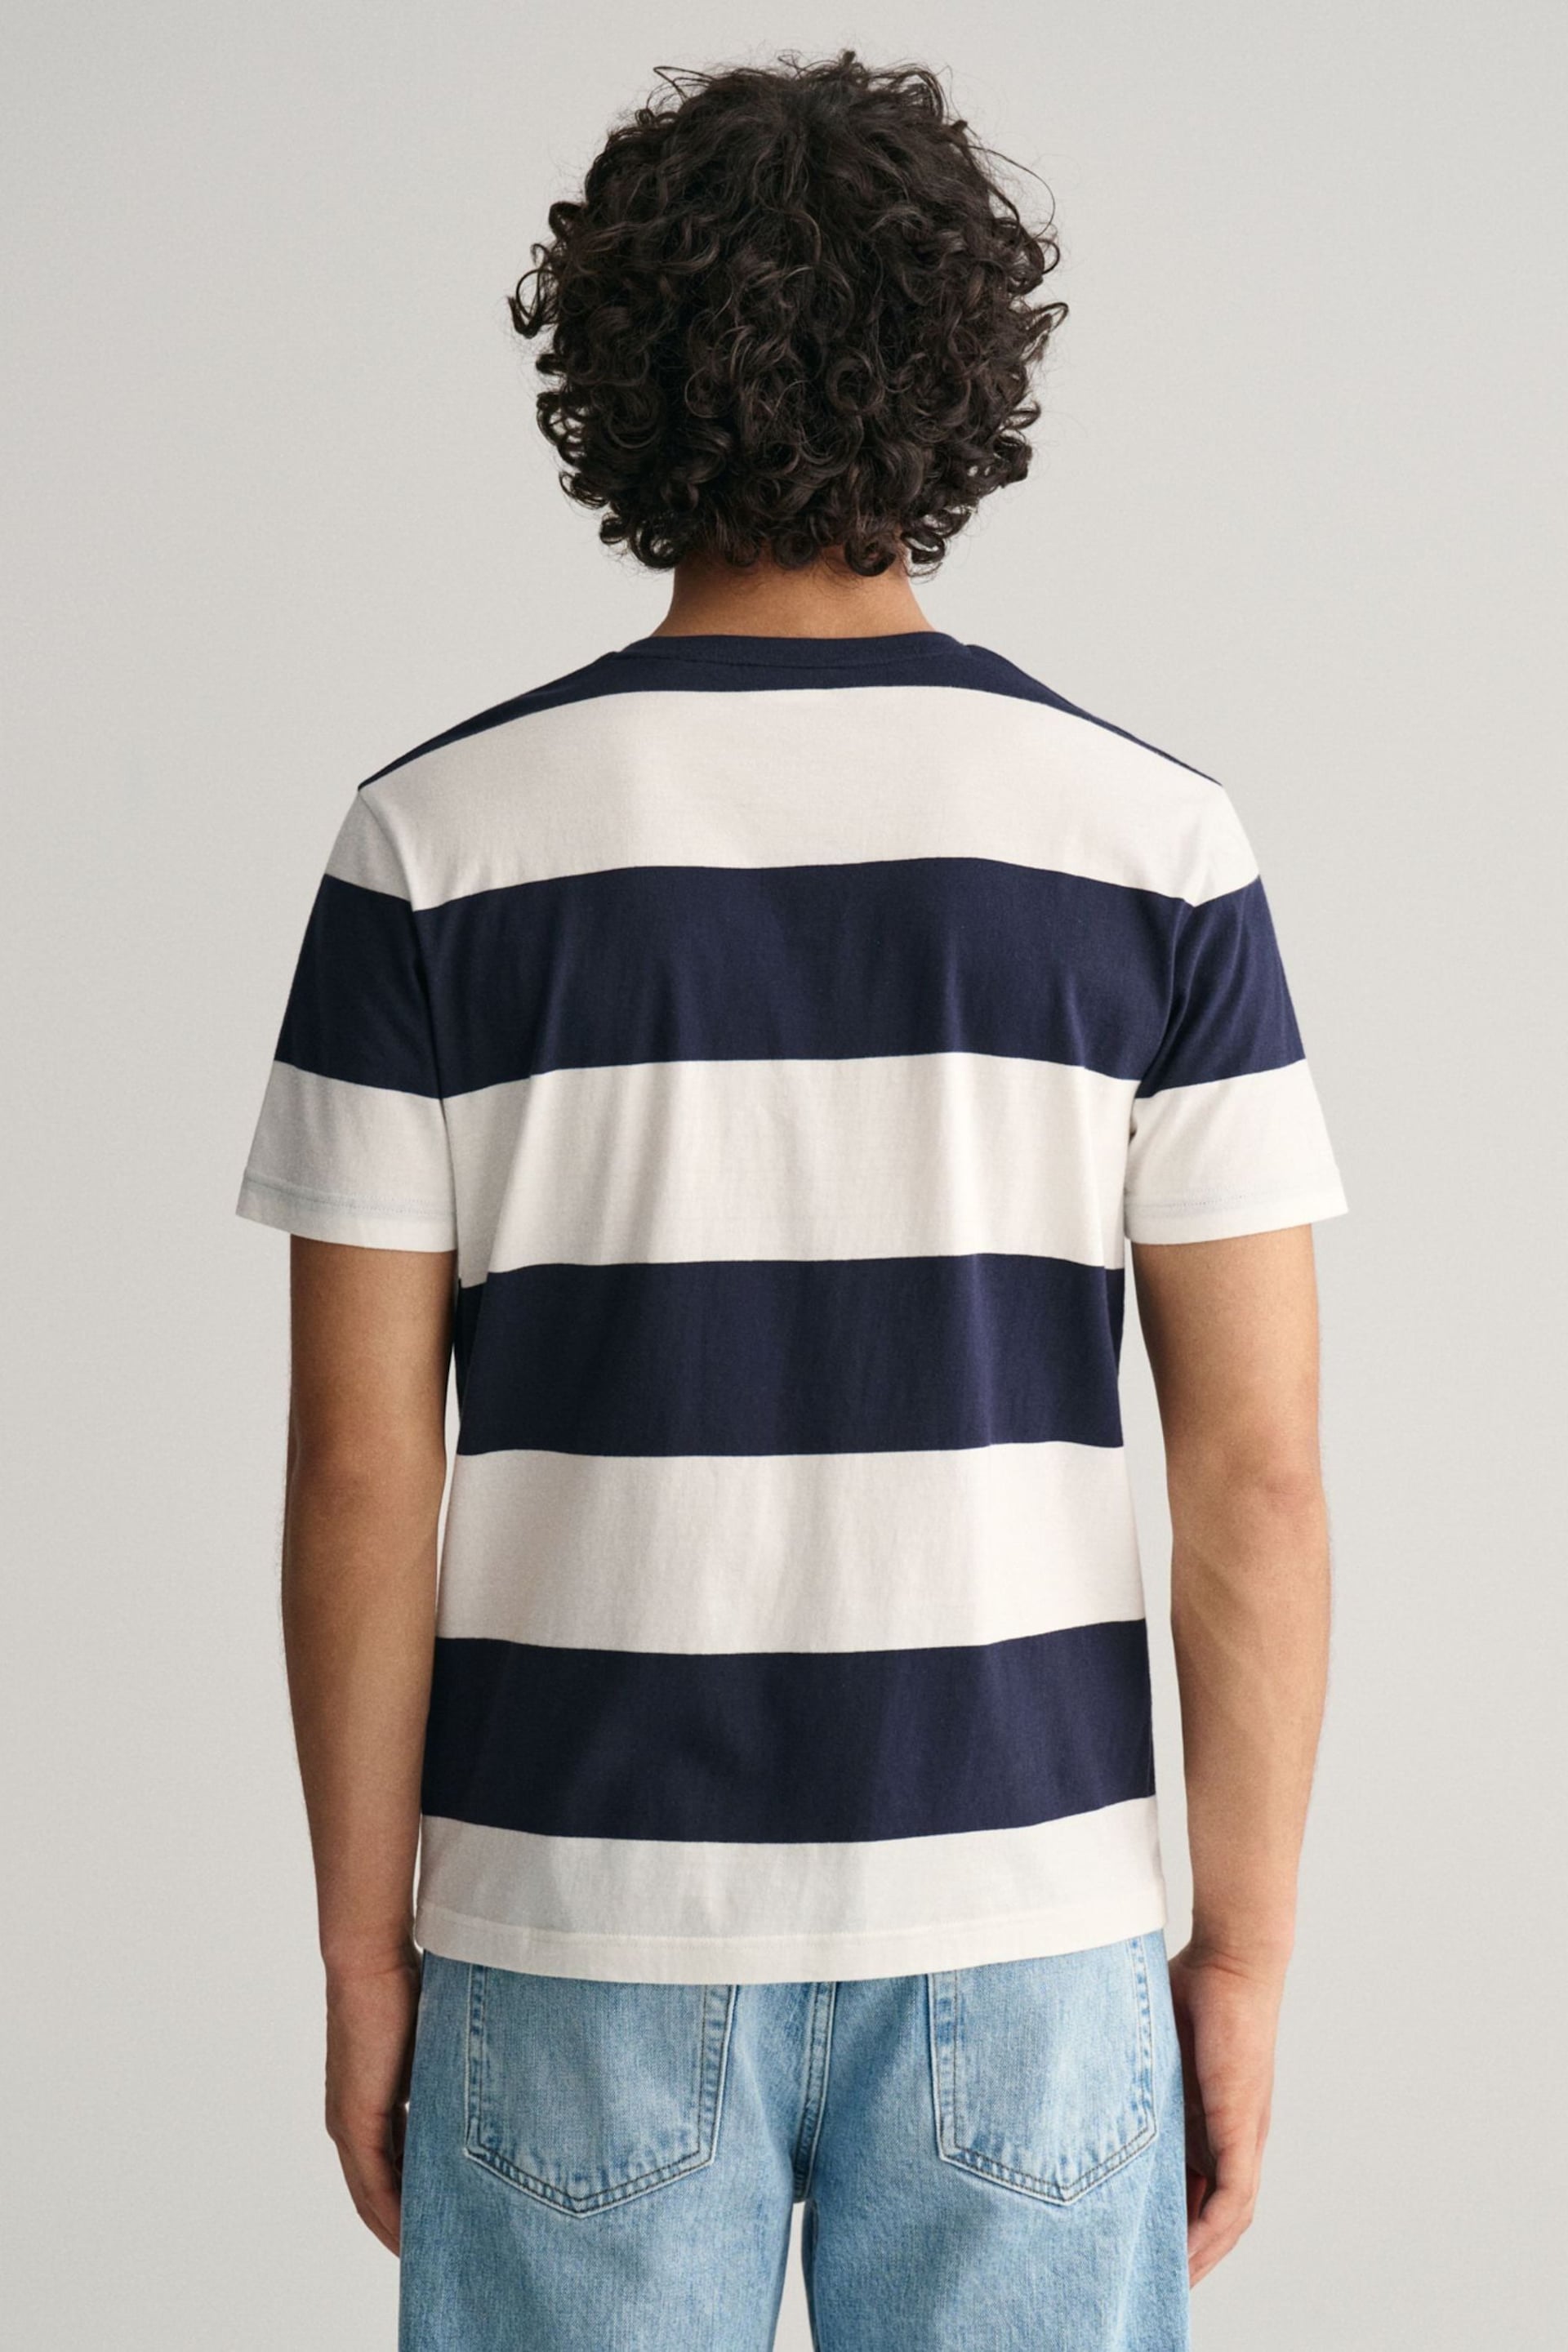 GANT White Barstripe Cotton T-Shirt - Image 2 of 5